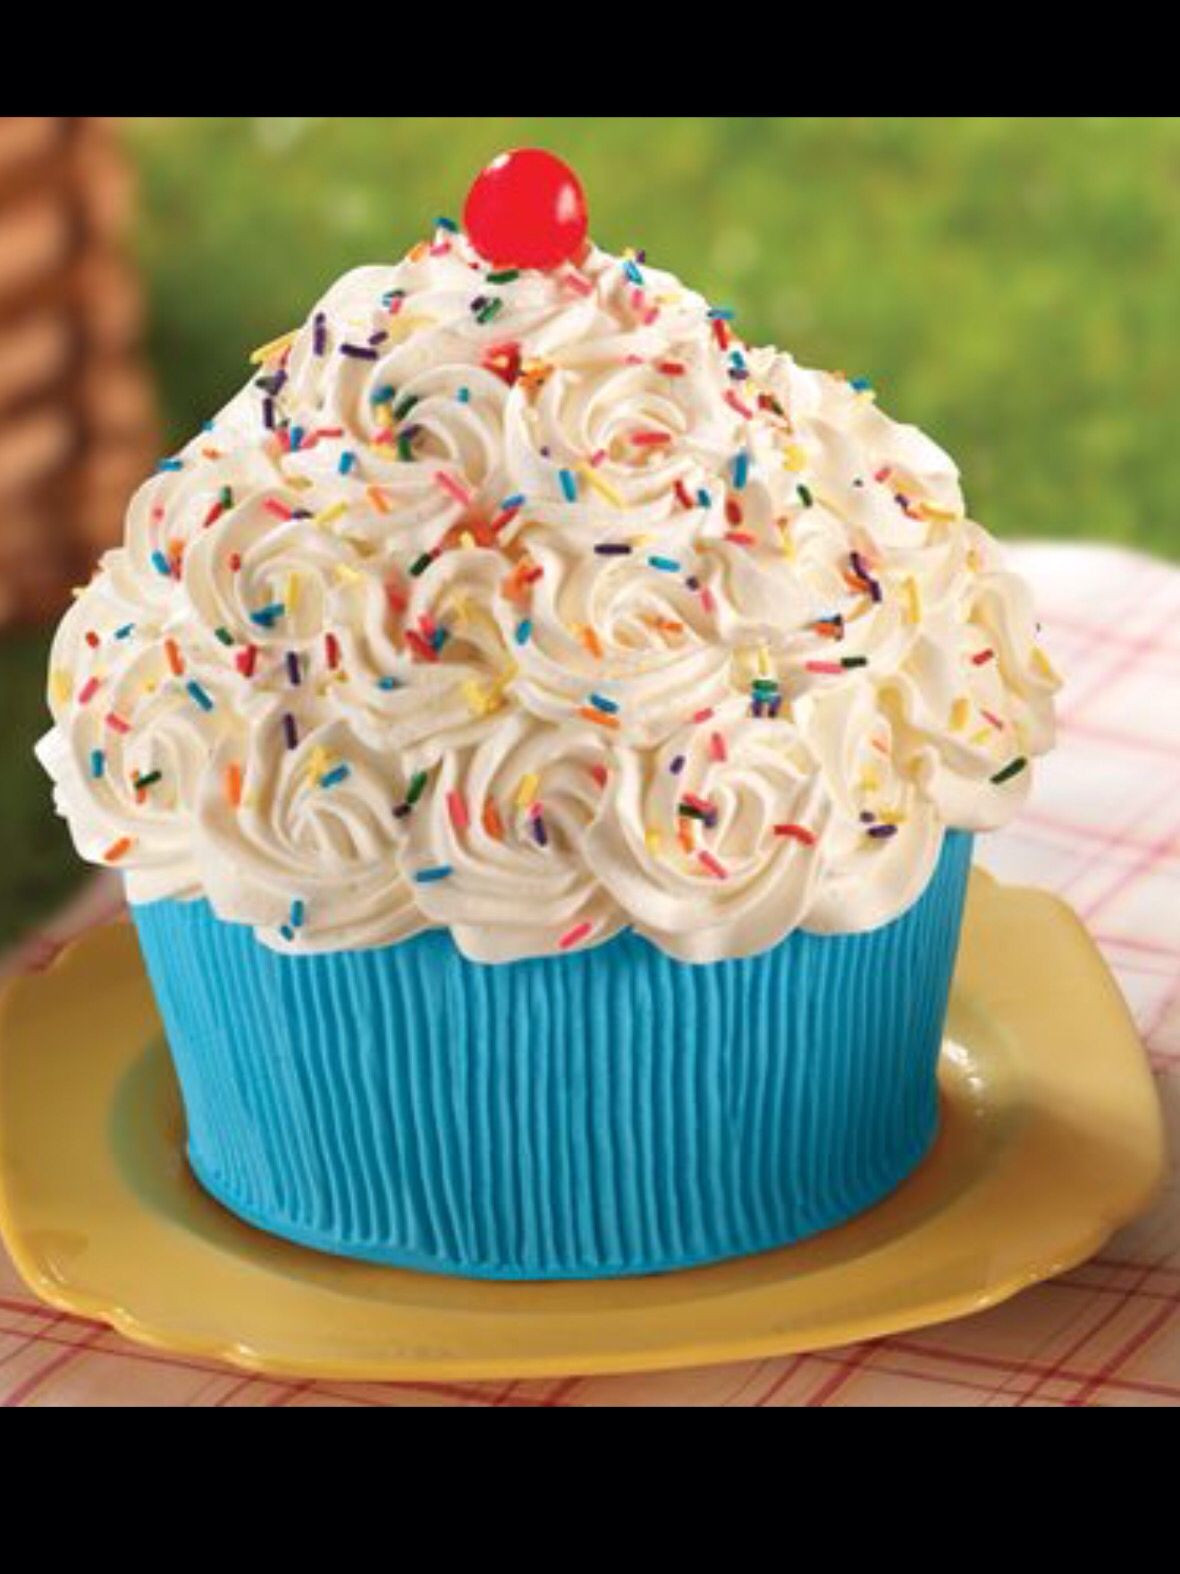 Birthday Cake Cupcakes
 GIANT CUPCAKE AWESOMENESS